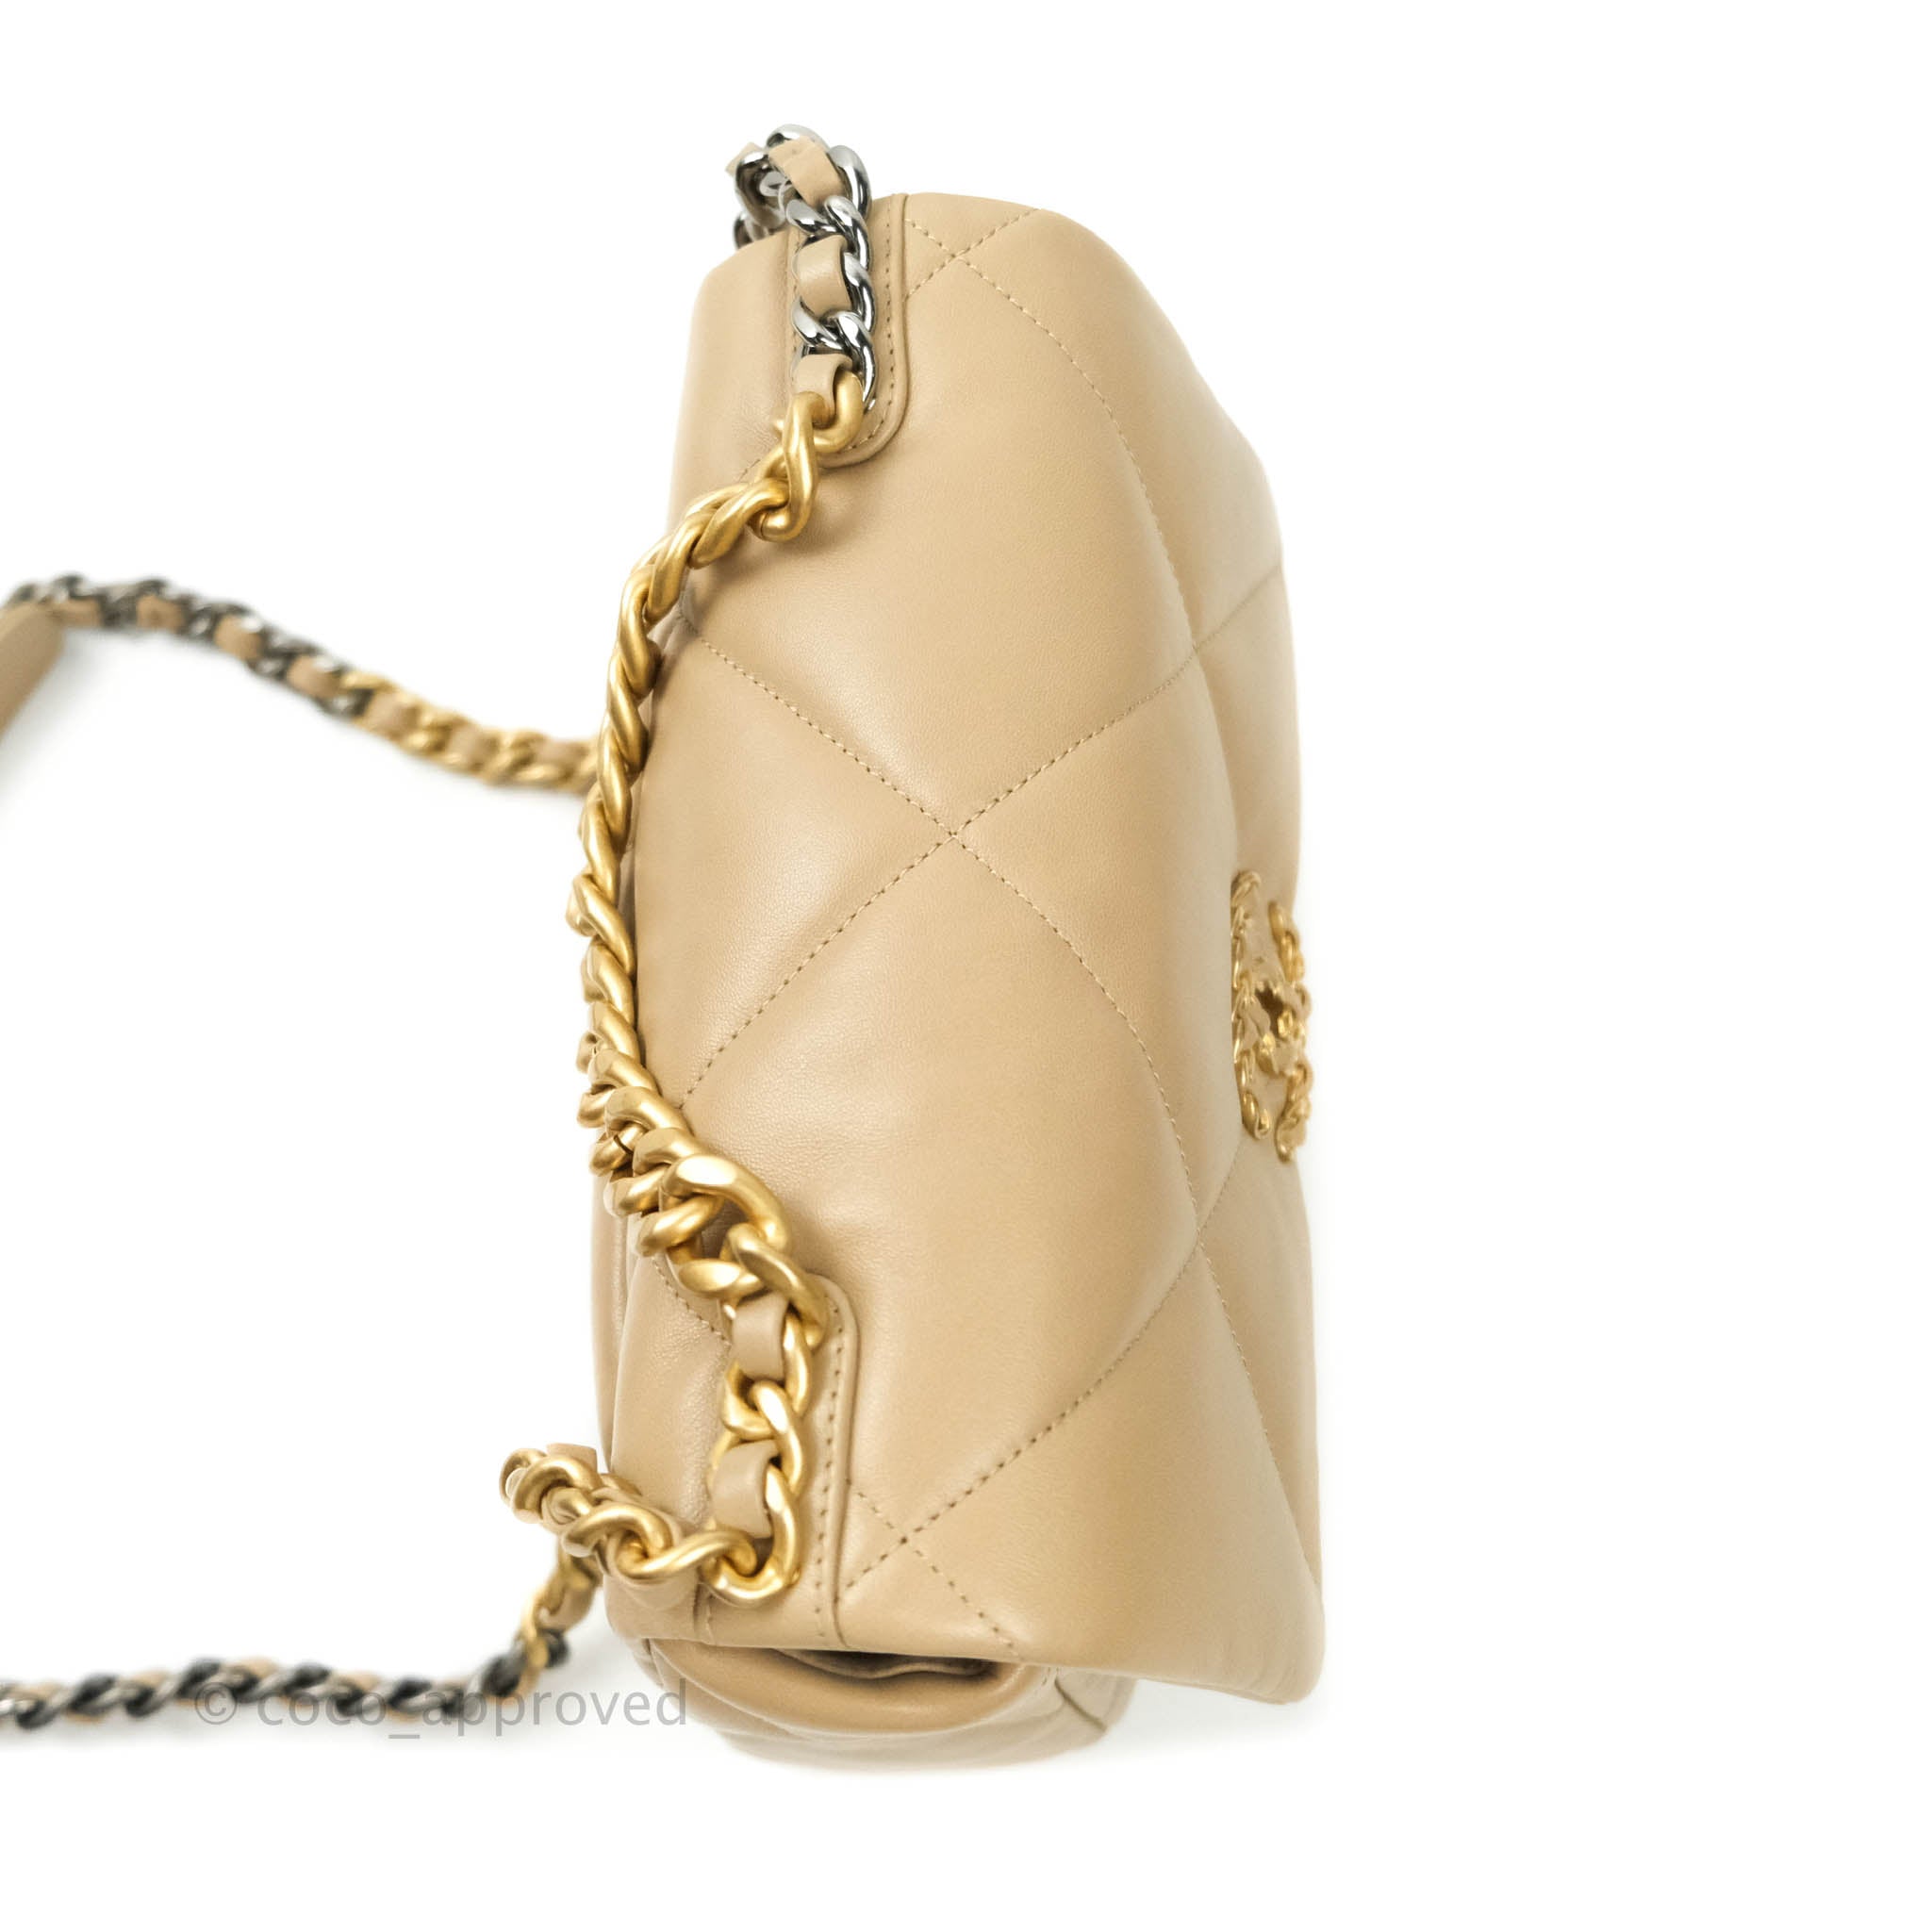 Mua Túi Đeo Chéo Chanel C19 Small Flap Bag In Dark Beige Màu Be - Chanel -  Mua tại Vua Hàng Hiệu h062683